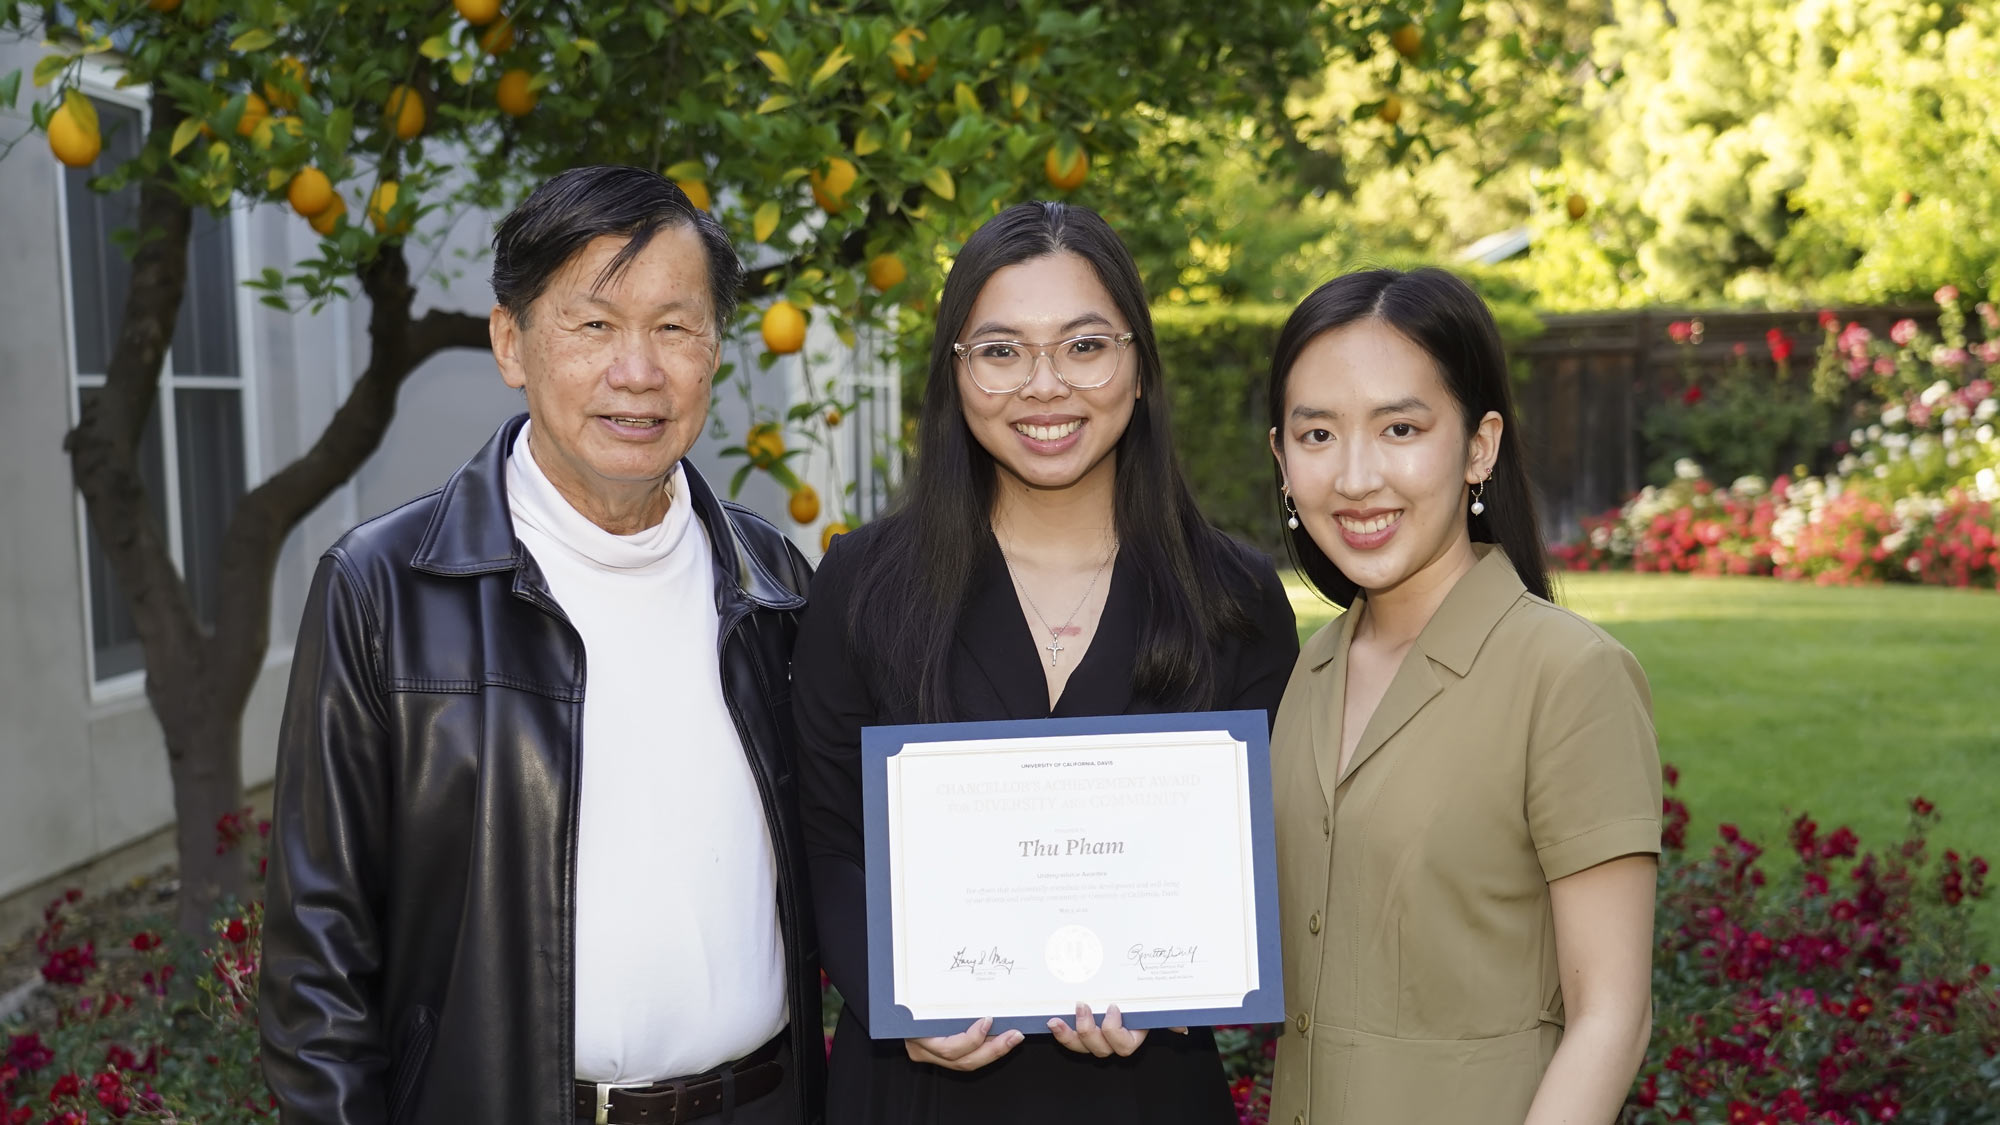 Three people, including undergraduate award recipient, posed, environmental